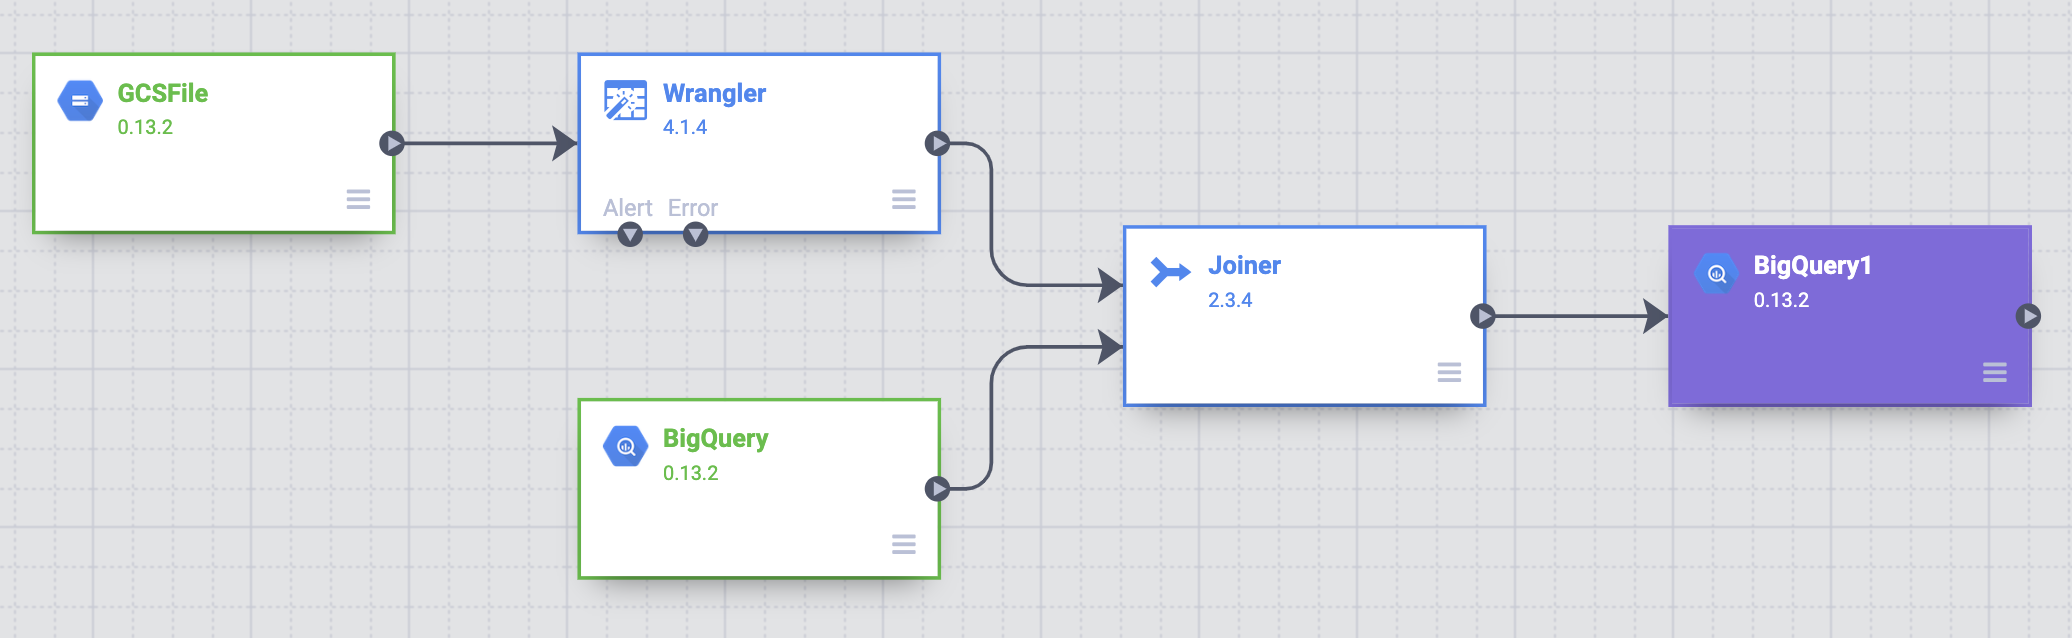 连接“Joiner”节点和 BigQuery 节点